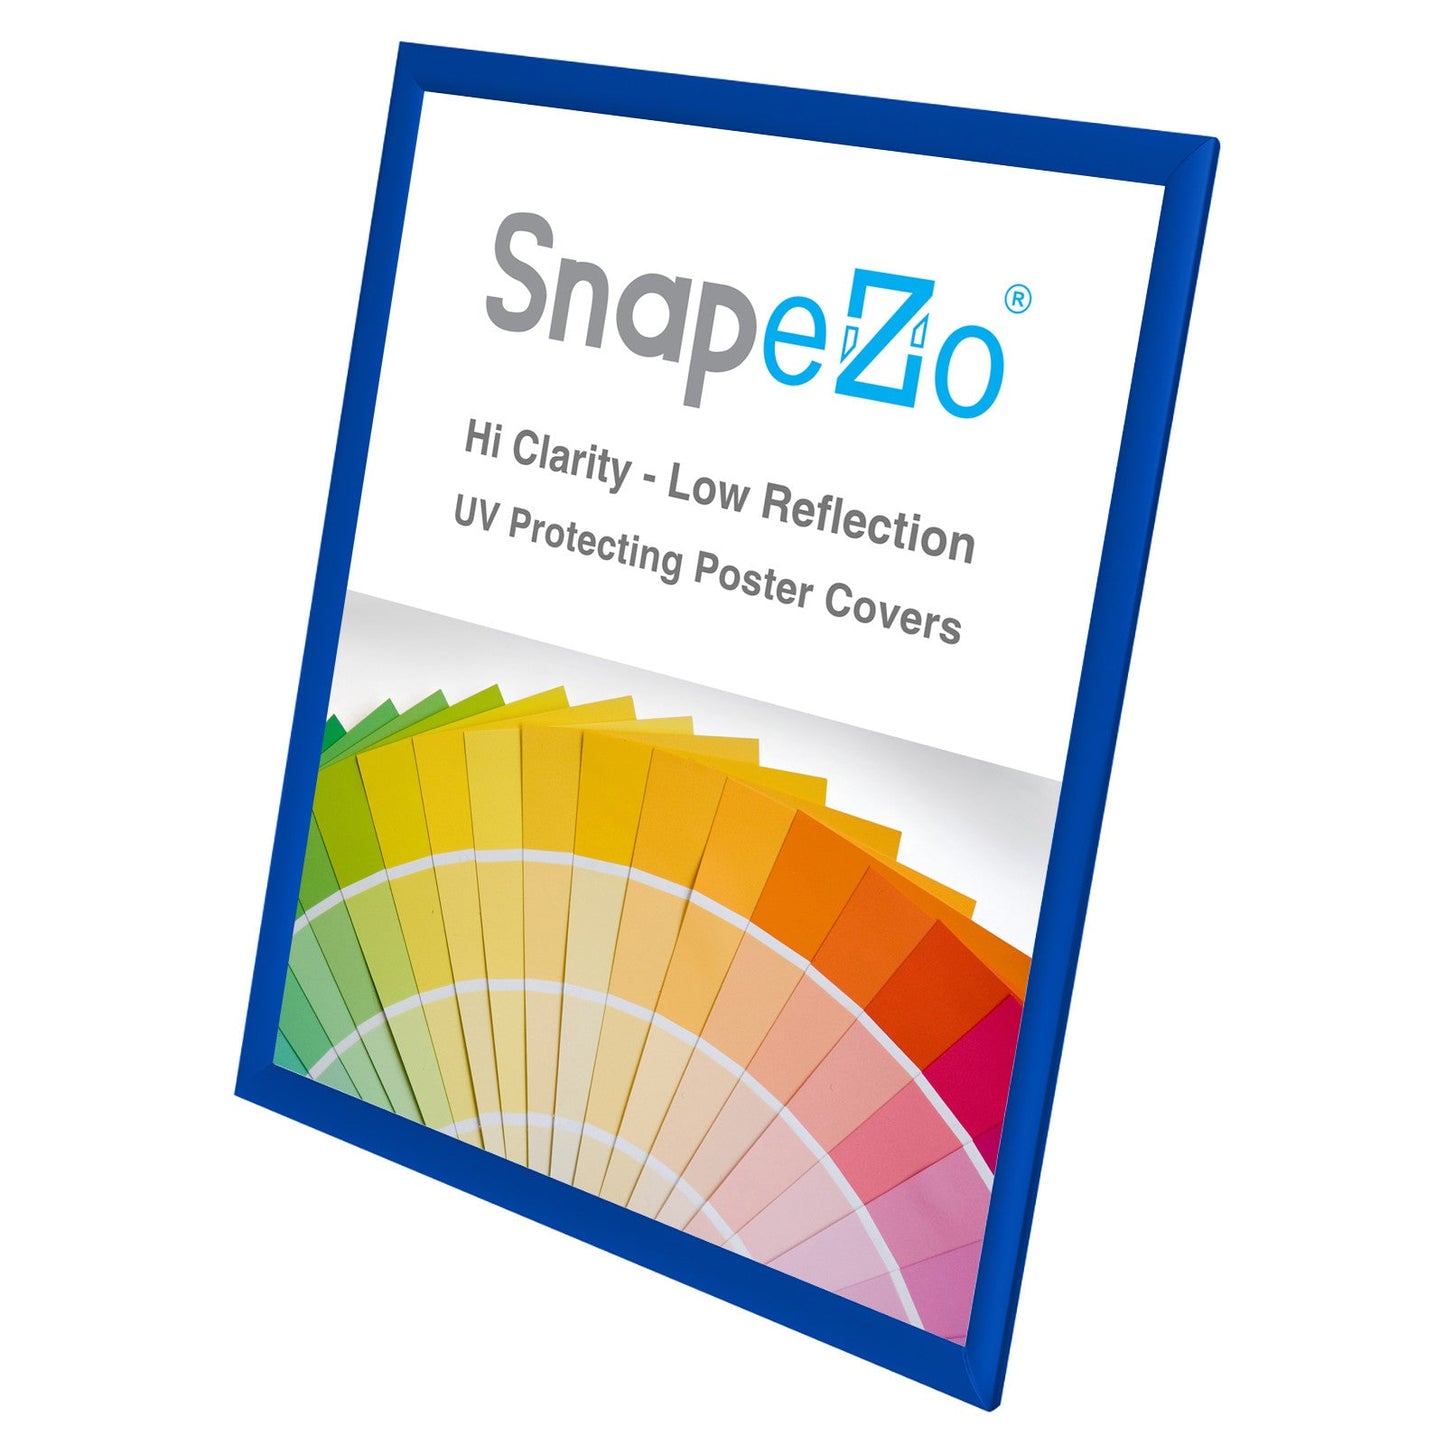 18x24 Blue SnapeZo® Snap Frame - 1" Profile